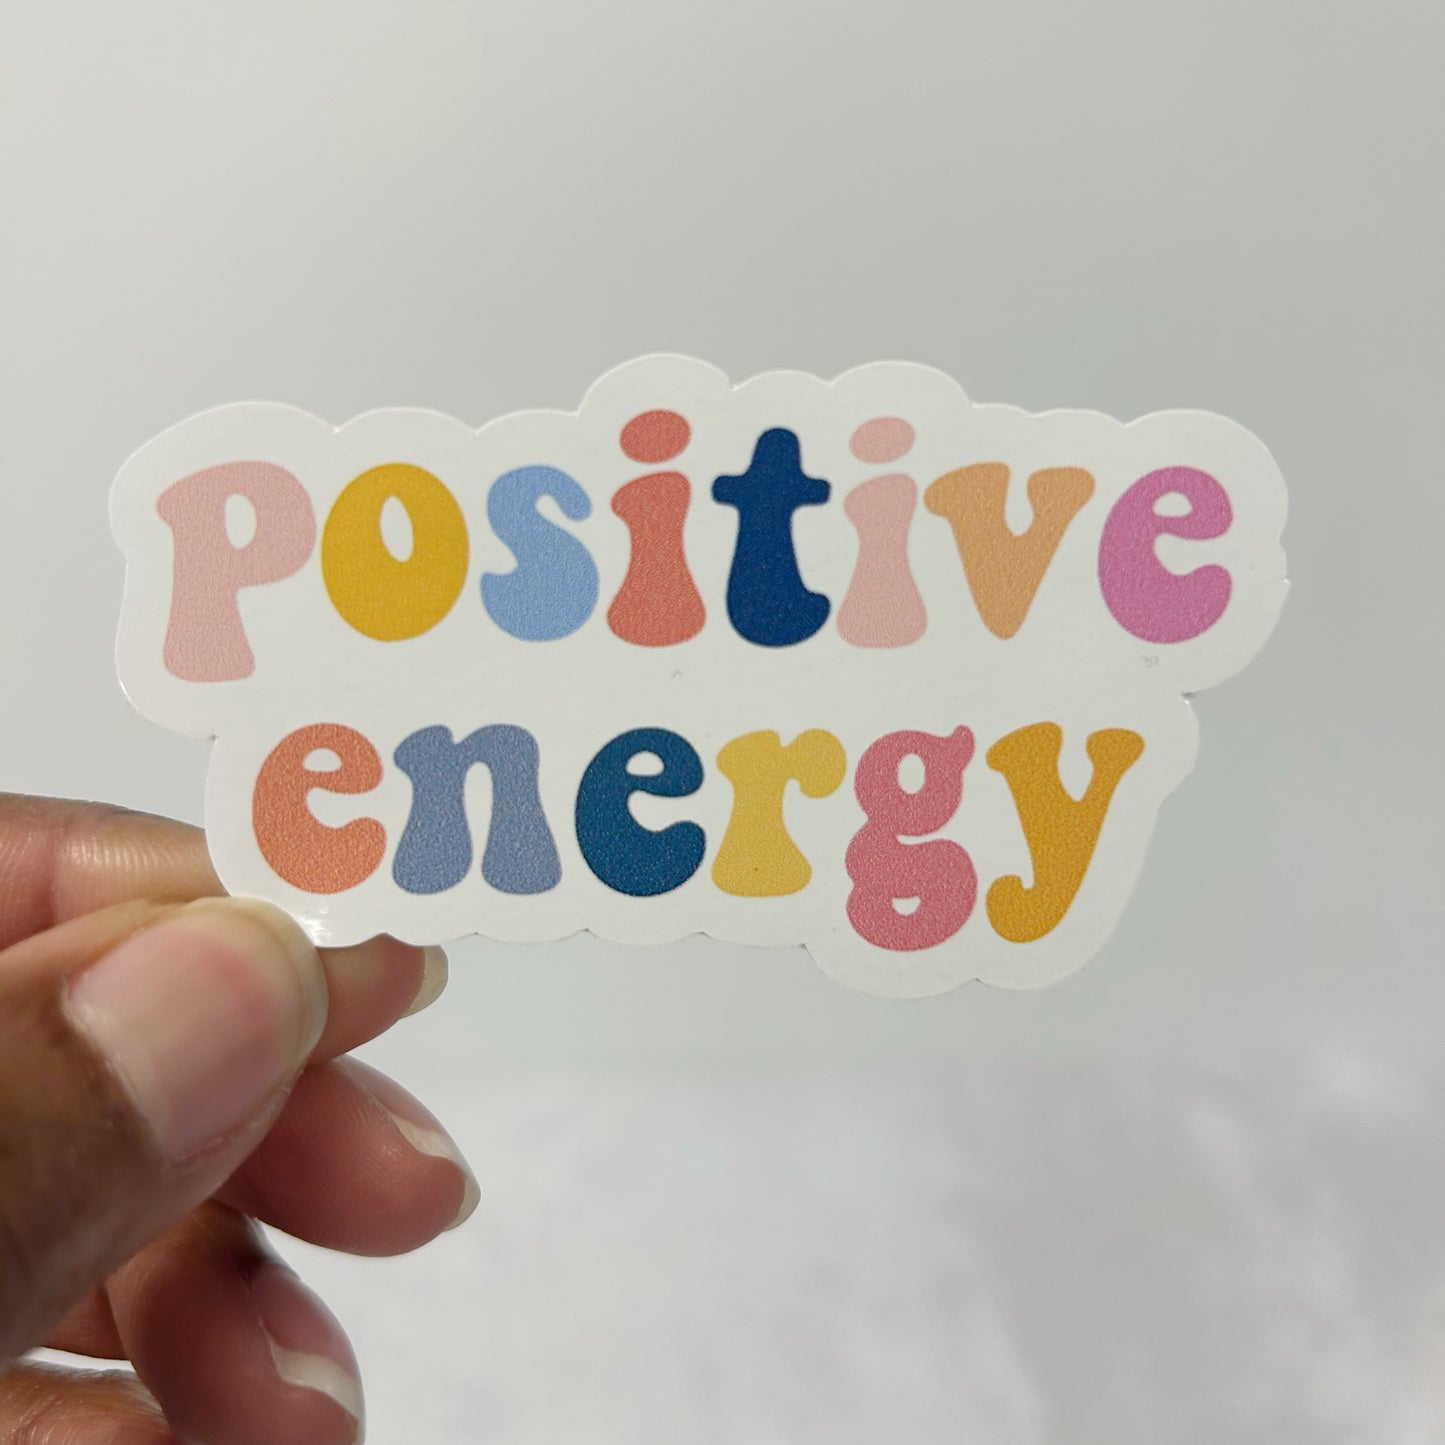 Positive Energy, Mental Health Sticker